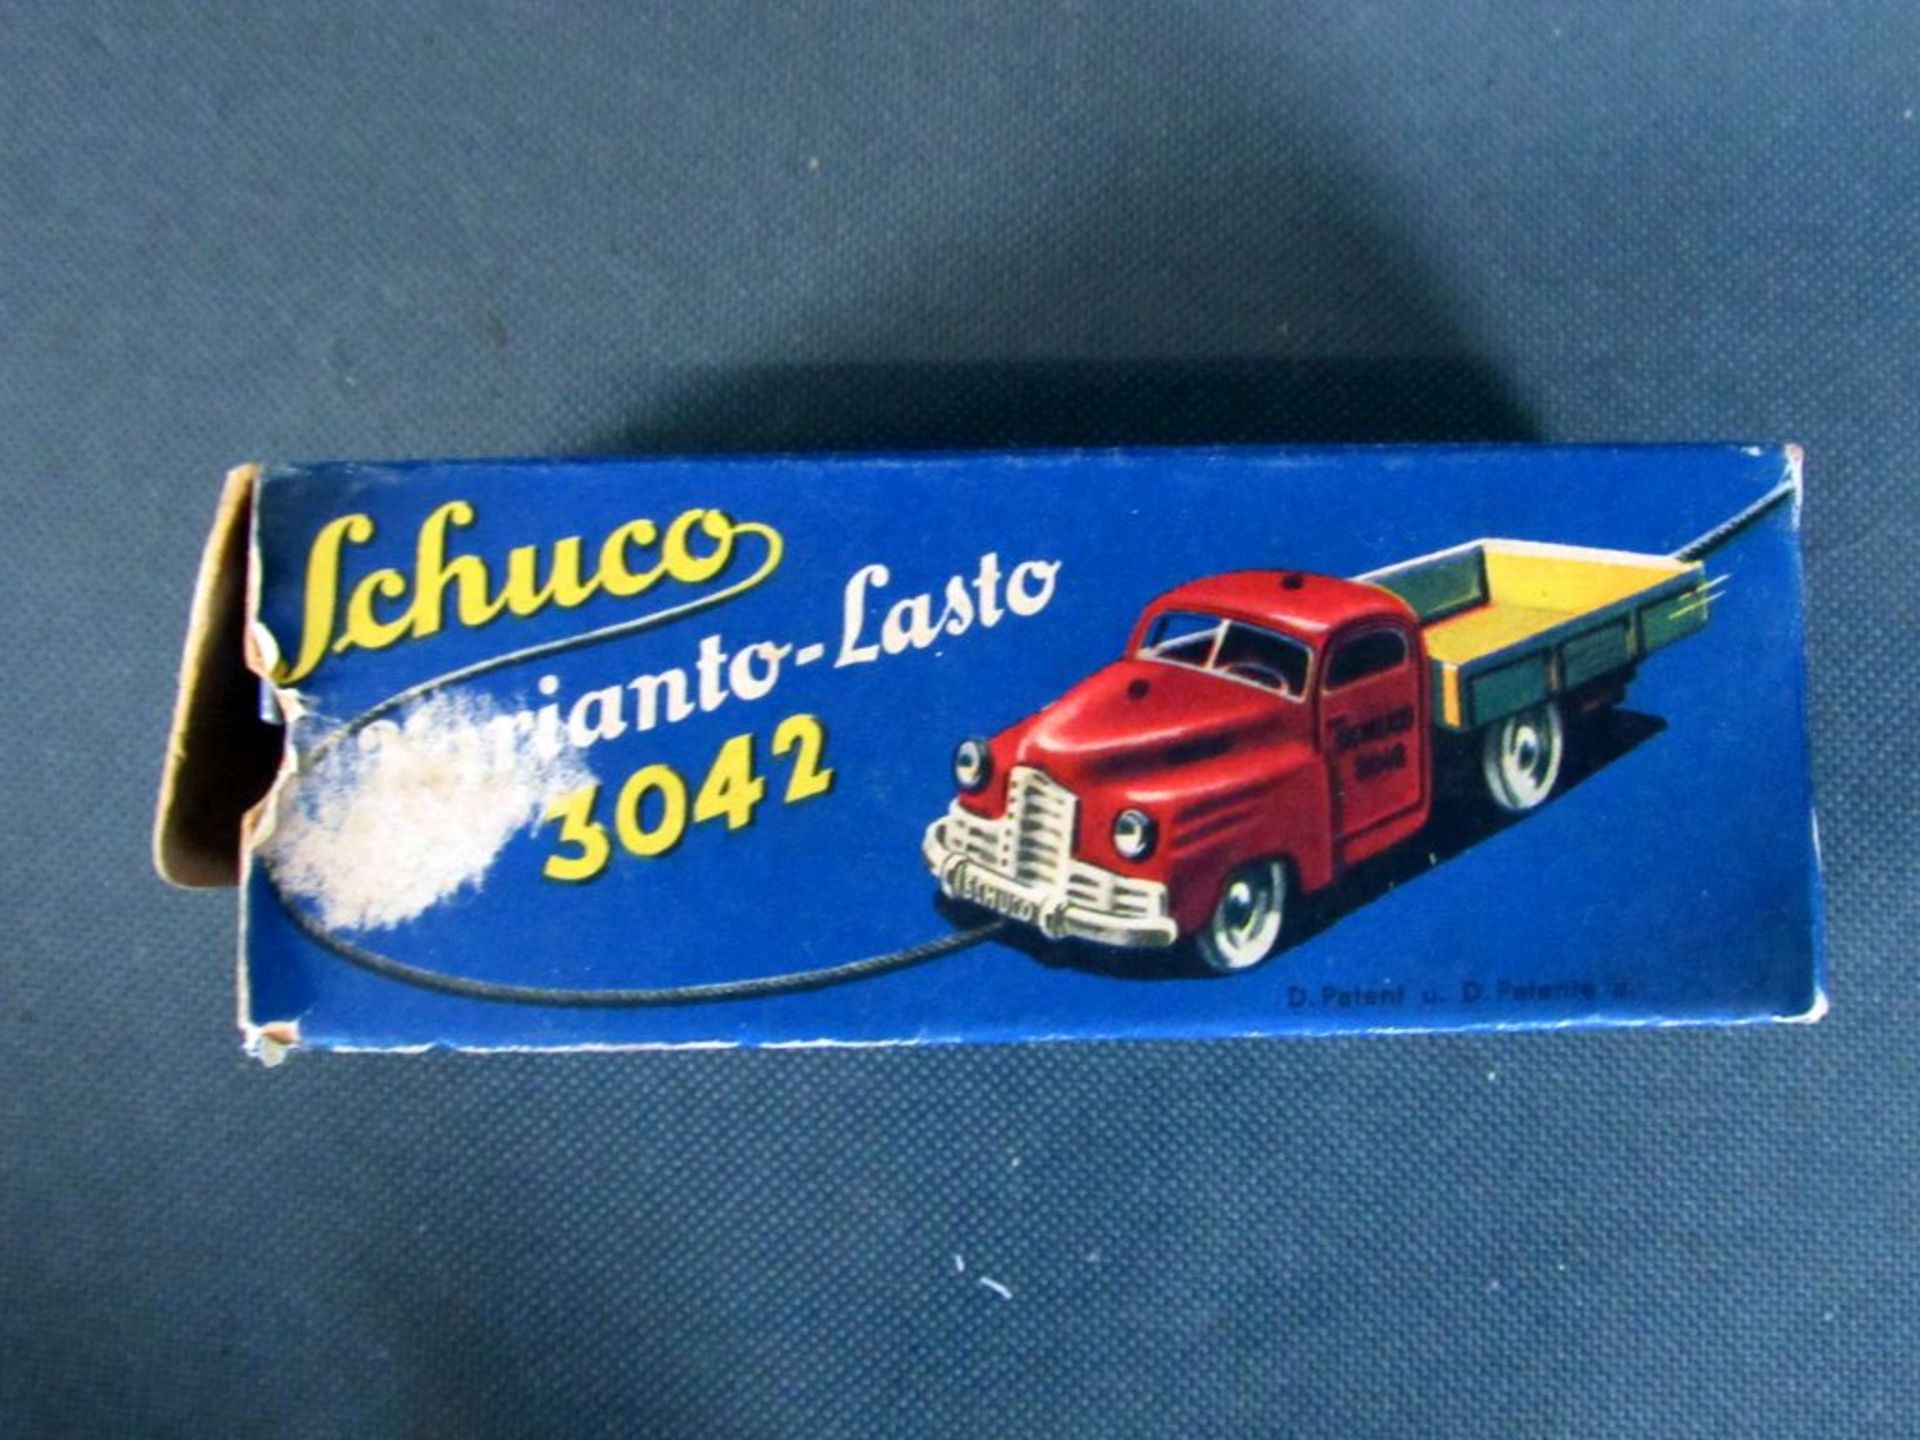 Spielzeug Schuco Varianto Lasto 3042